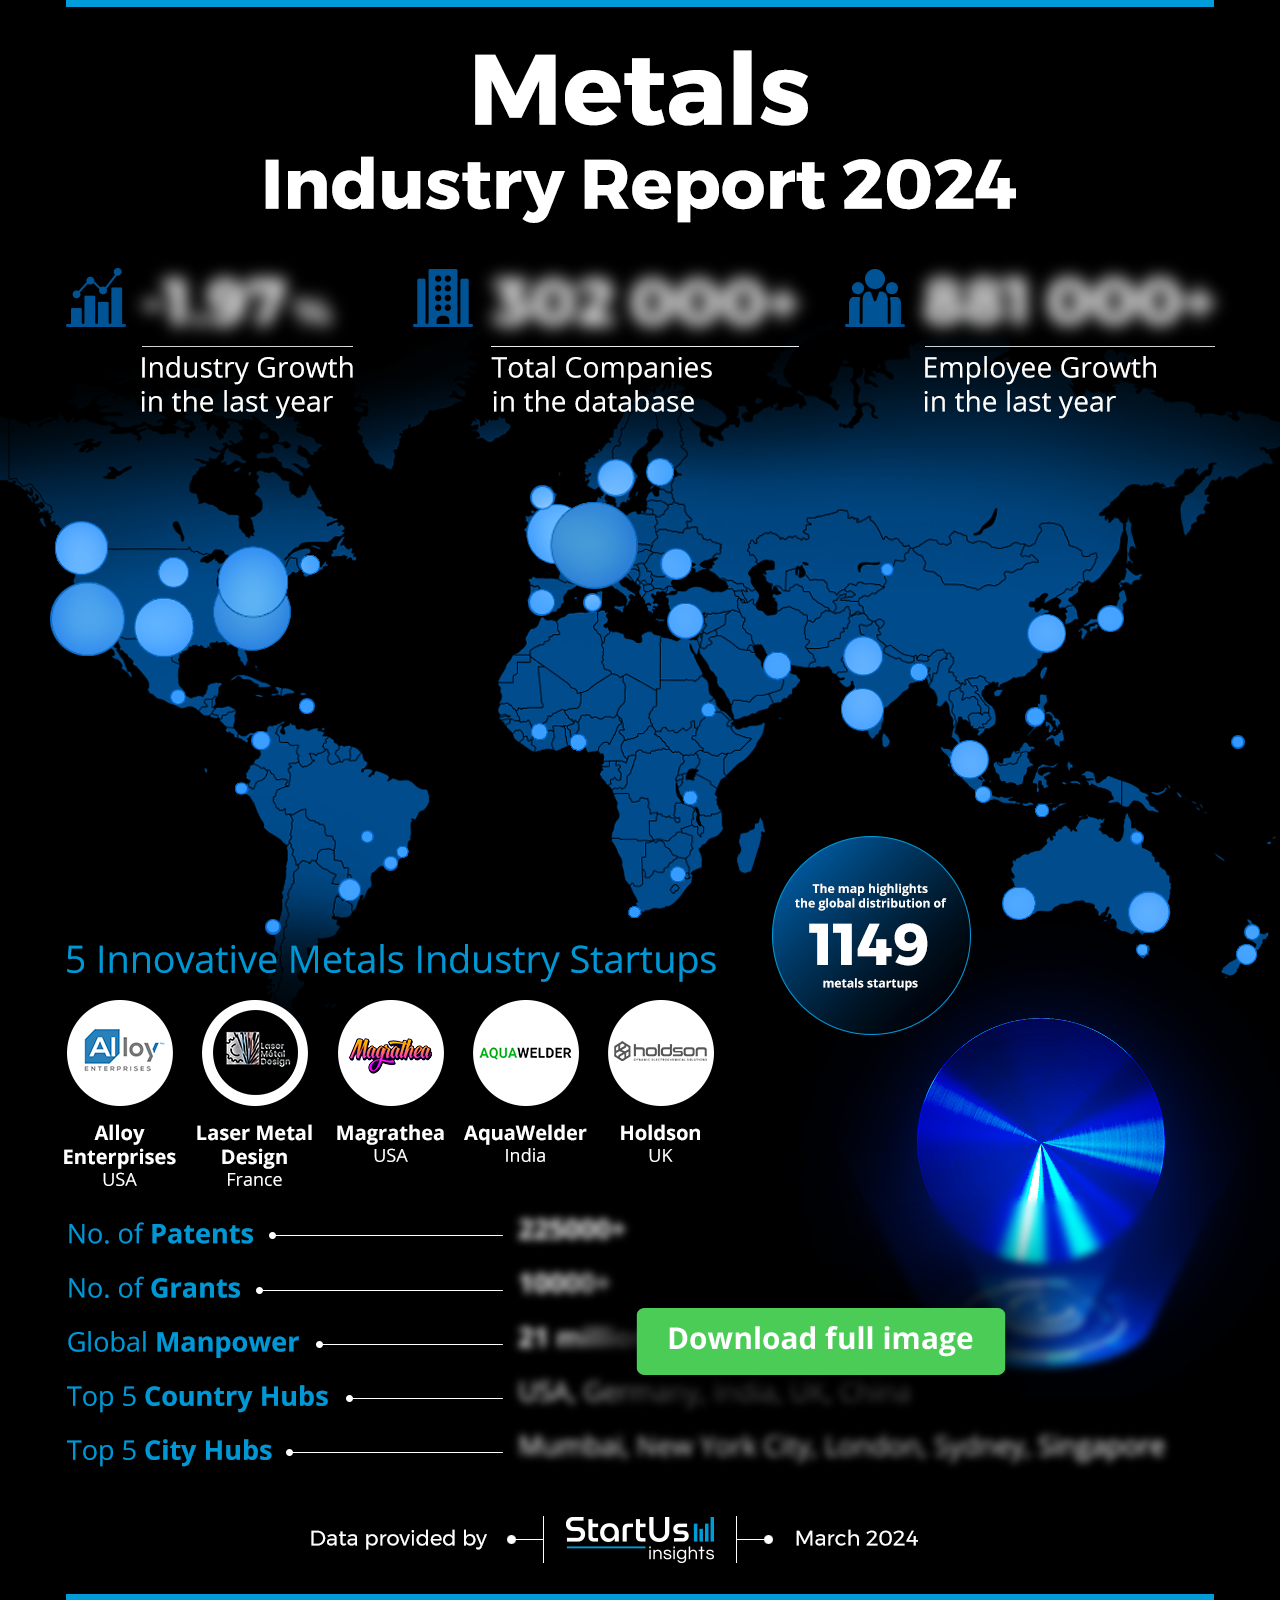 Metals Industry Report 2024 | StartUs Insights